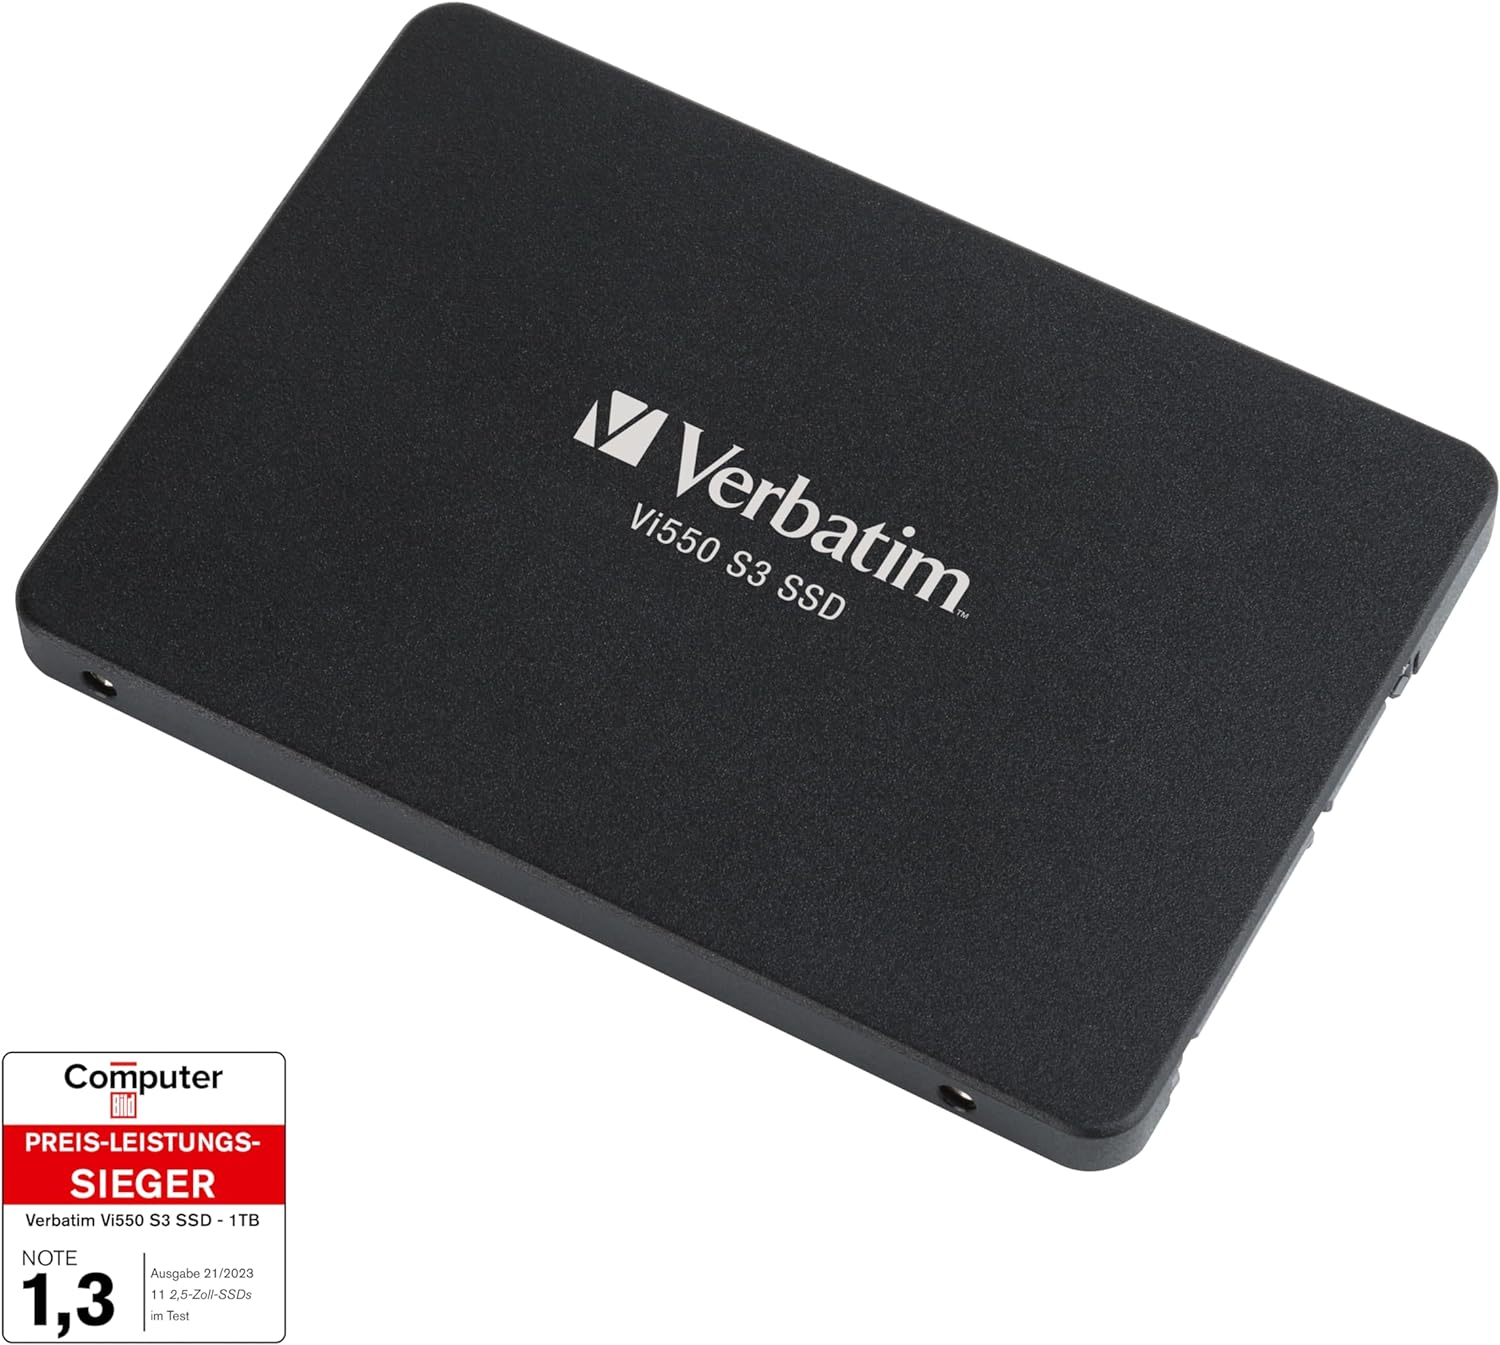 SSD VI550 S3 1TB 2,5 VERBATIM 